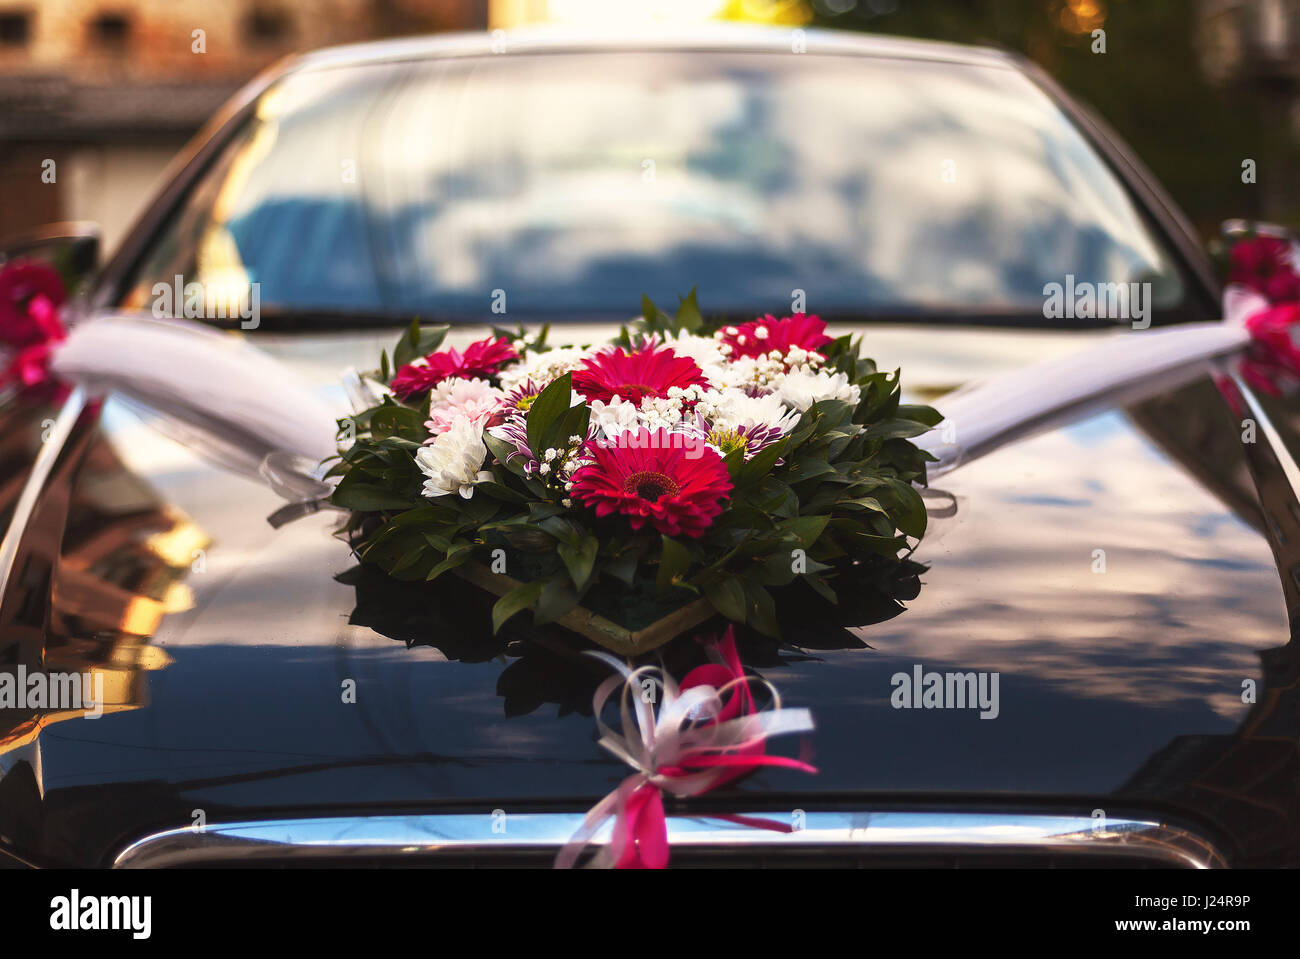 https://c8.alamy.com/comp/J24R9P/closeup-view-on-flower-decoration-on-modern-wedding-car-J24R9P.jpg